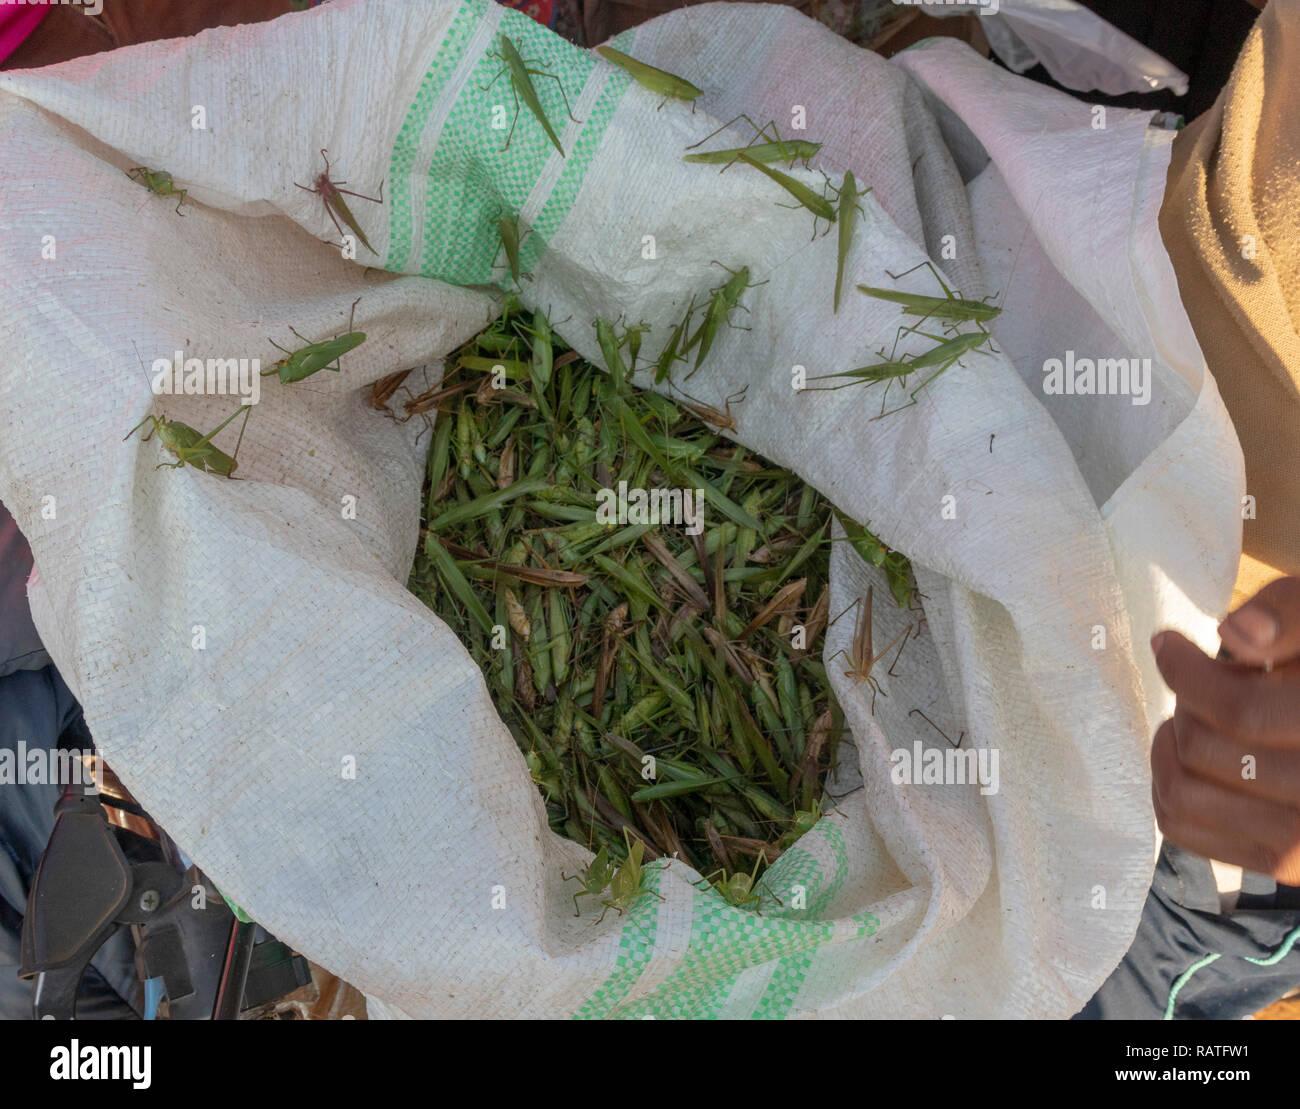 bag of captured katydids (Tettigoniidae) for sale as nsenene snack food, Uganda, Africa Stock Photo